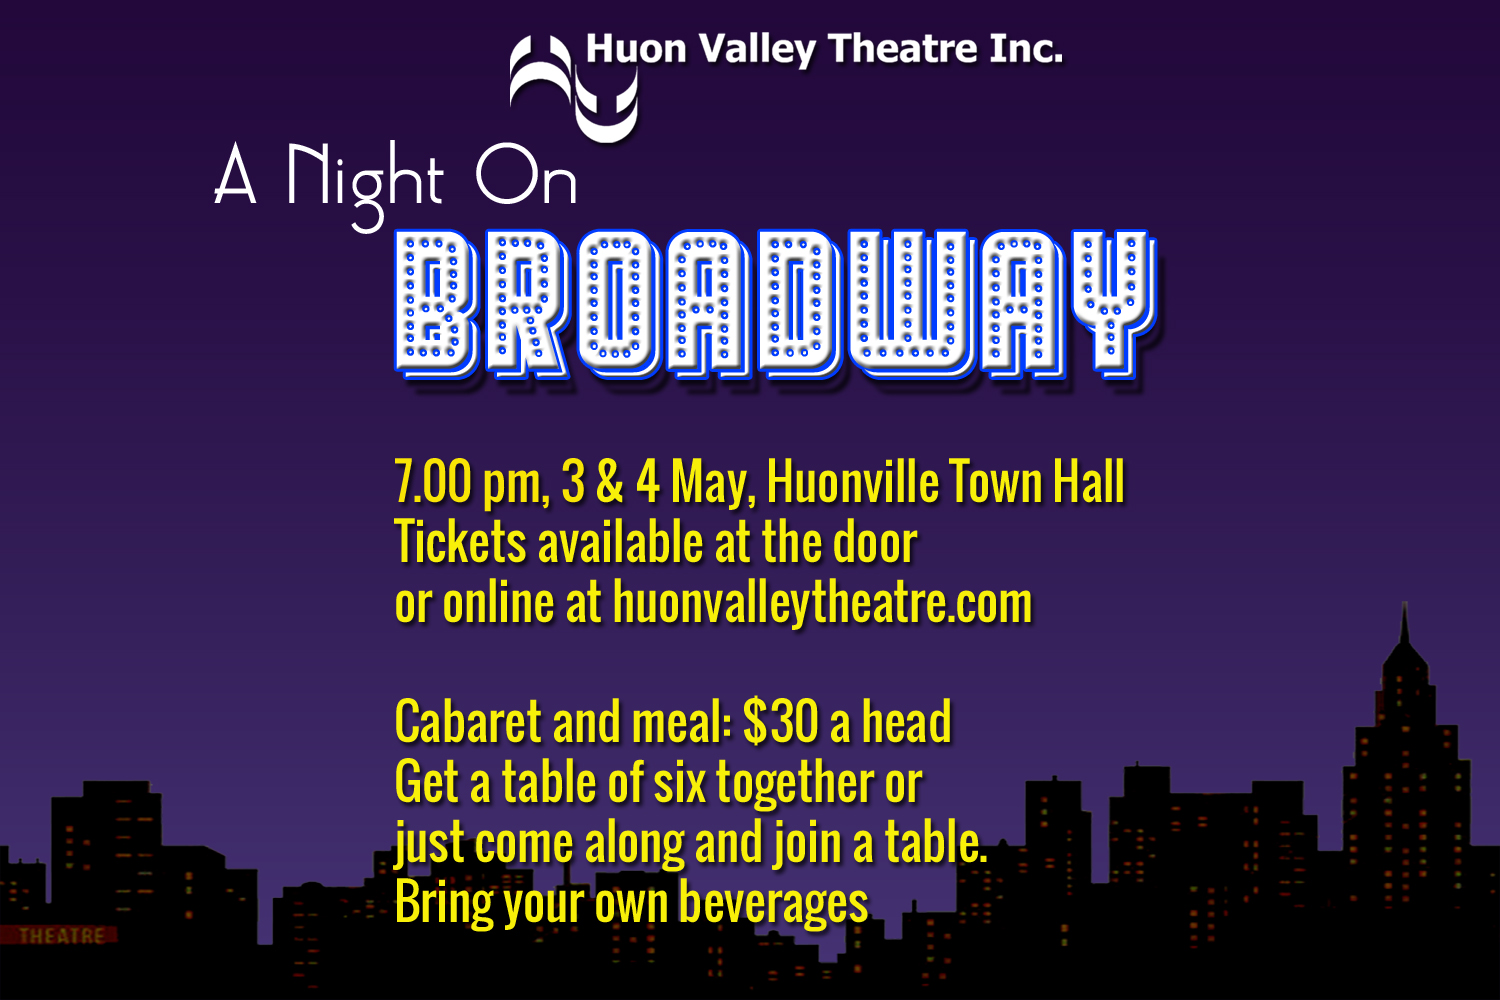 Huon Valley Theatre